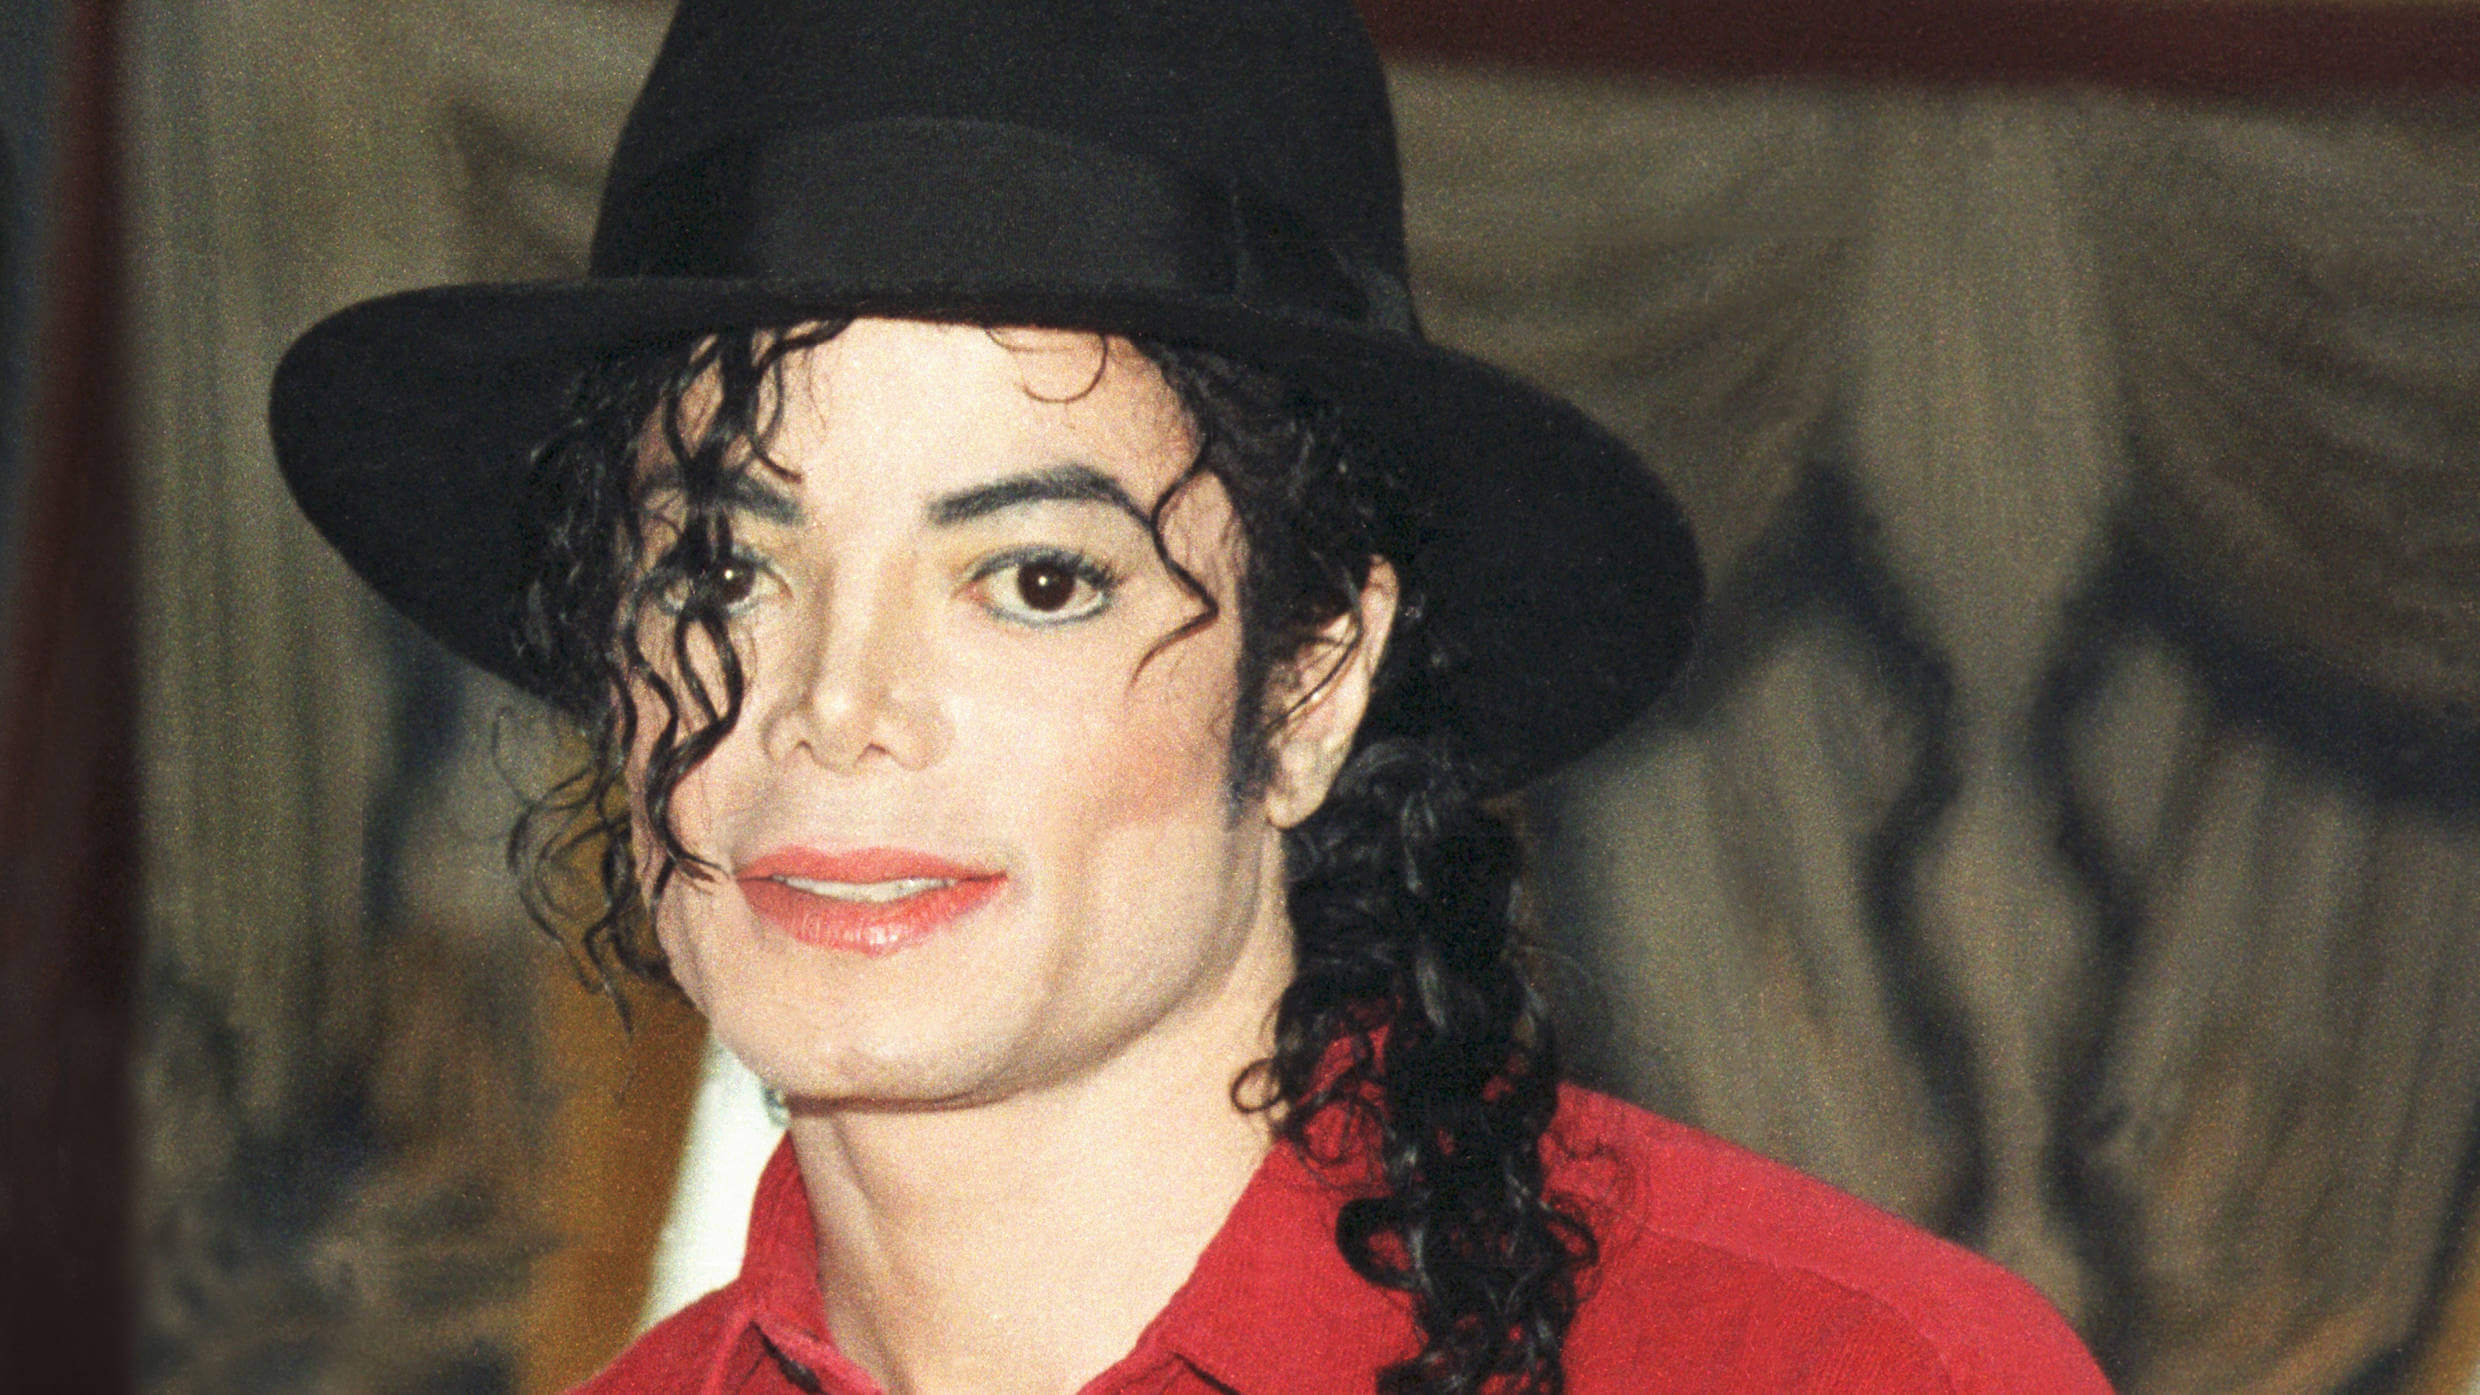 Michael Jackson passed away on June 25, 2009